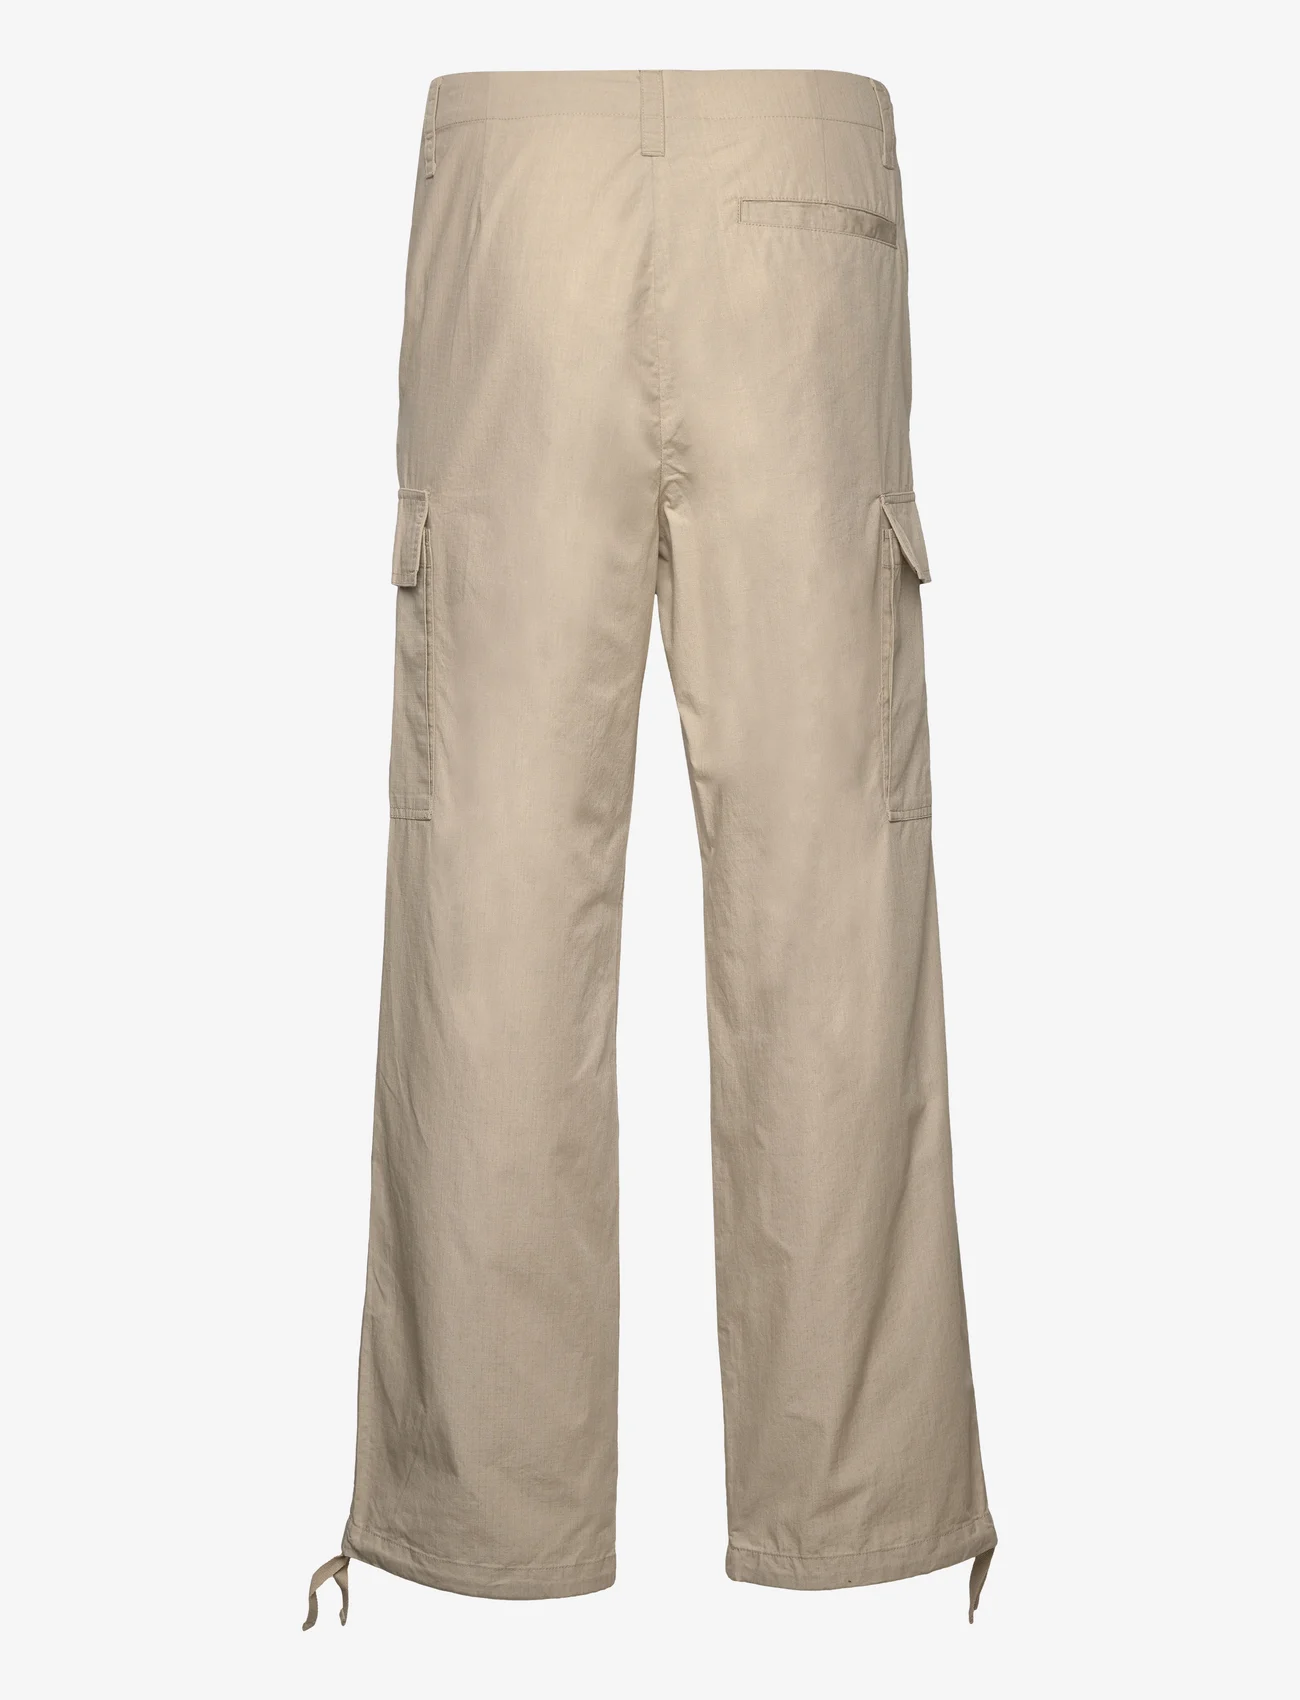 Samsøe Samsøe - Ross trousers 14740 - cargobroeken - agate gray - 1